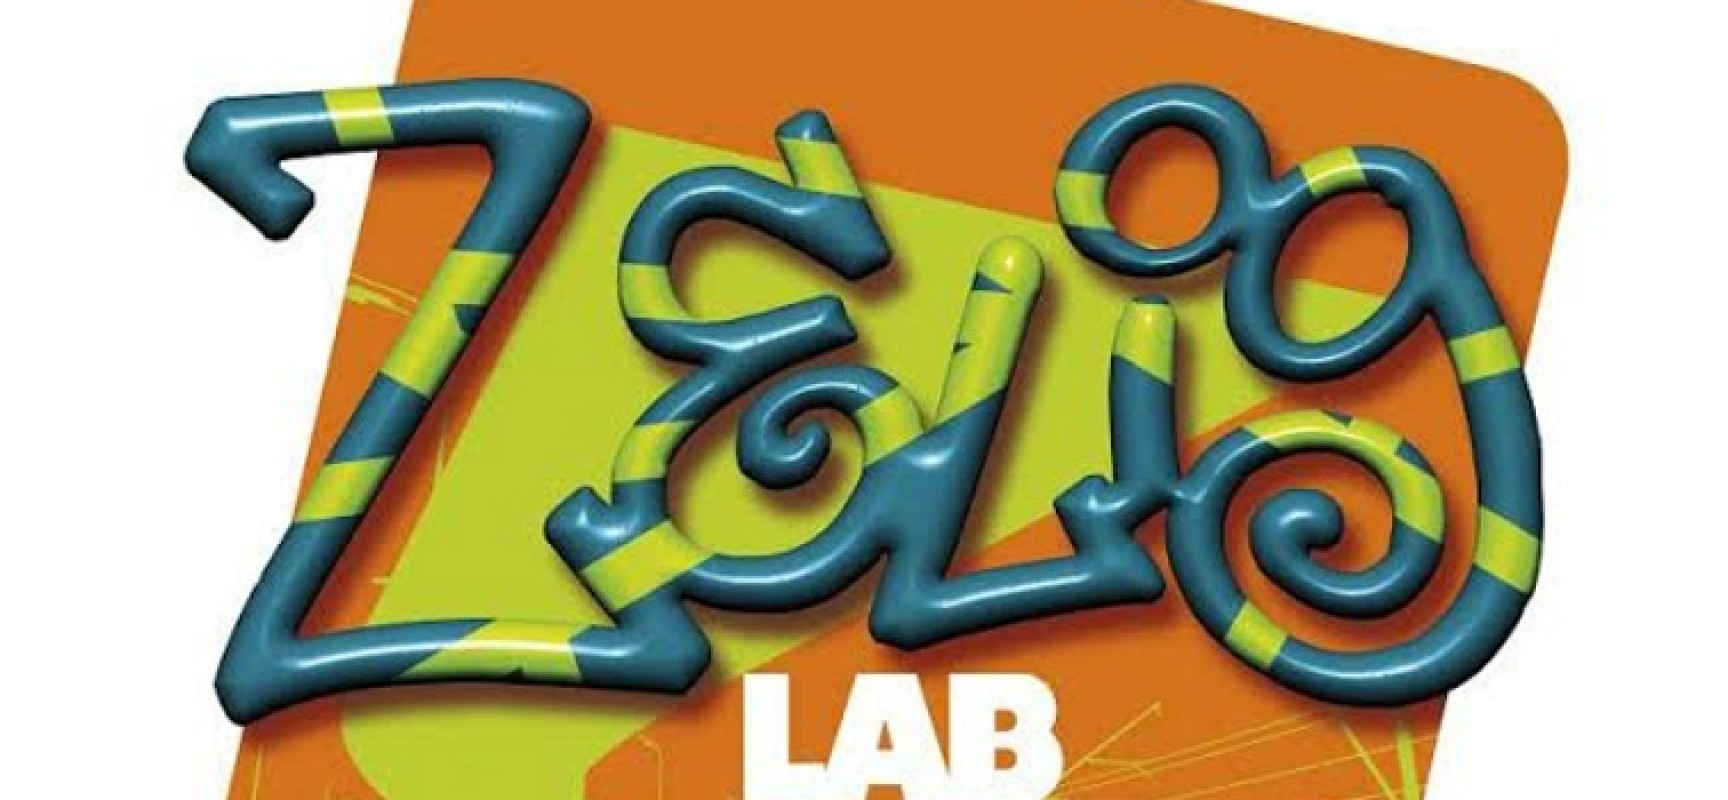 Zelig Lab a Bisceglie, venerdì 29 il primo appuntamento all’Open Source